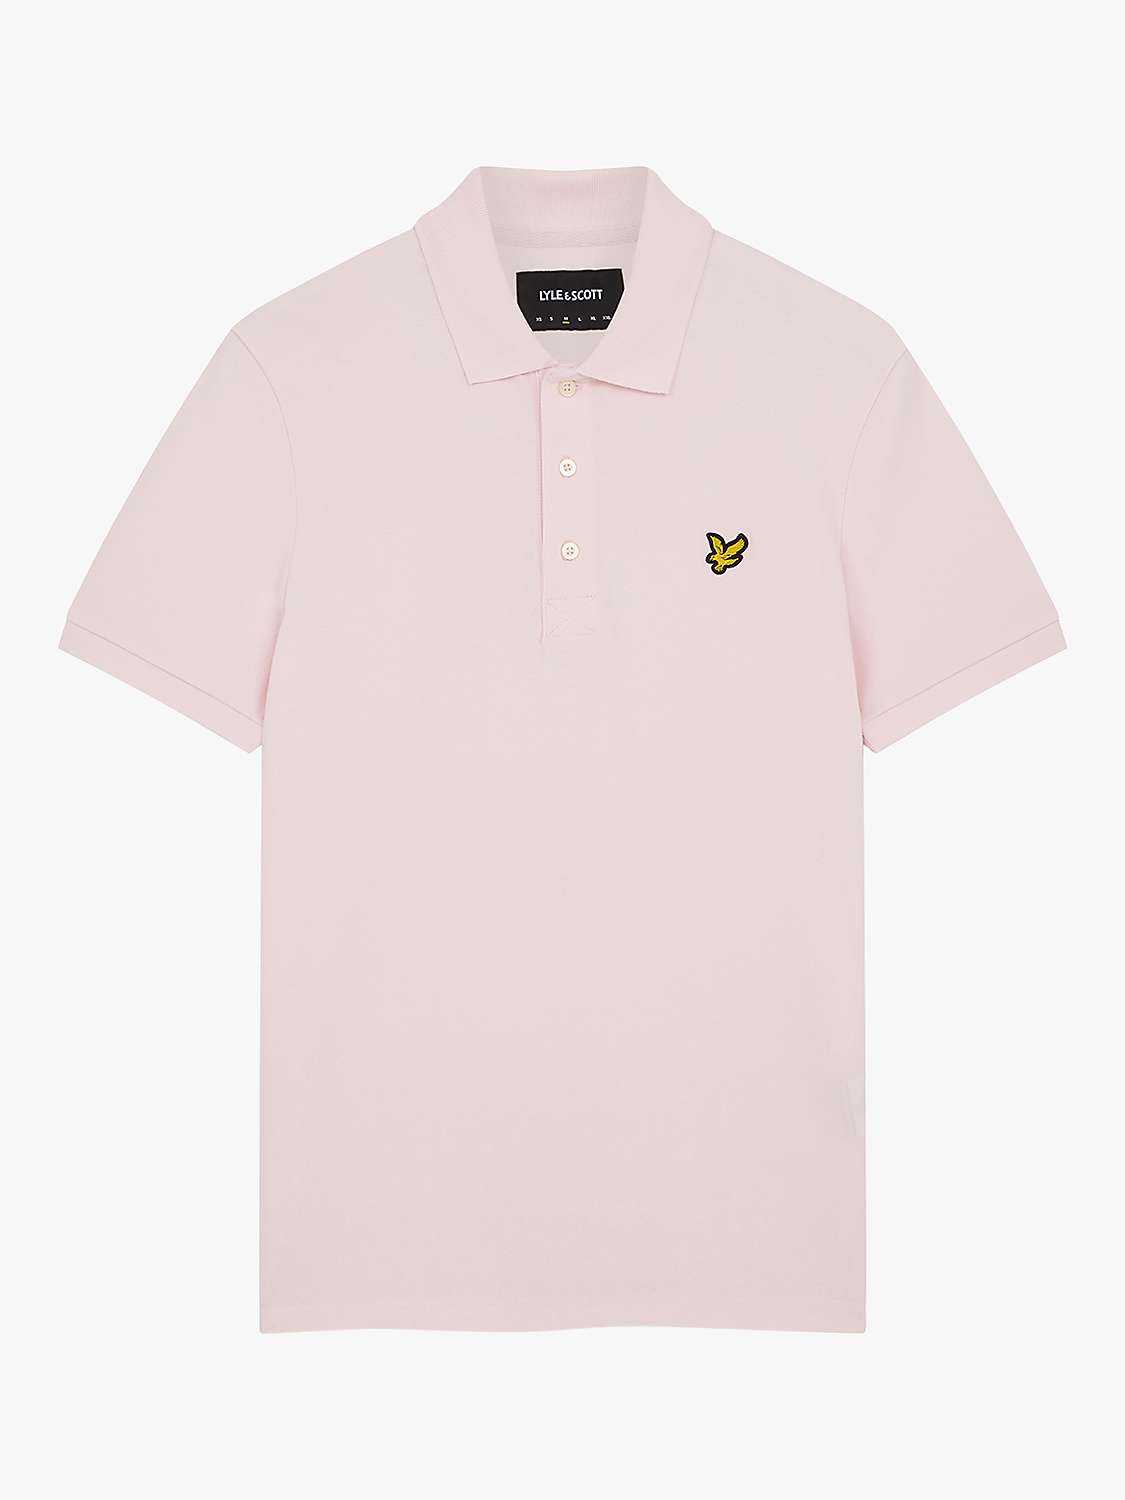 Lyle & Scott Short Sleeve Polo Shirt, W488 Light Pink at John Lewis ...